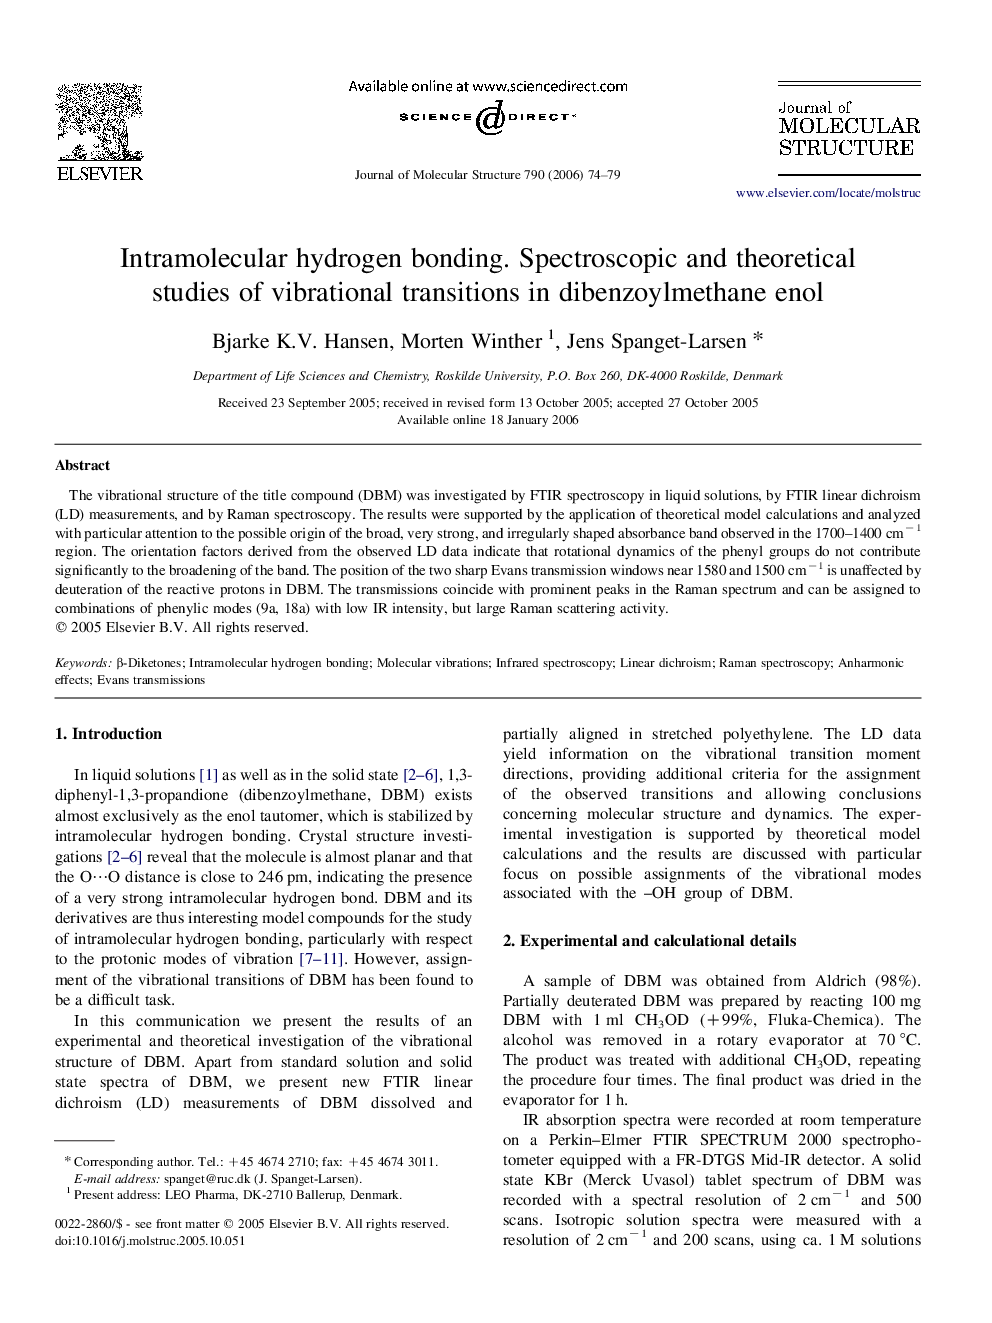 Intramolecular hydrogen bonding. Spectroscopic and theoretical studies of vibrational transitions in dibenzoylmethane enol